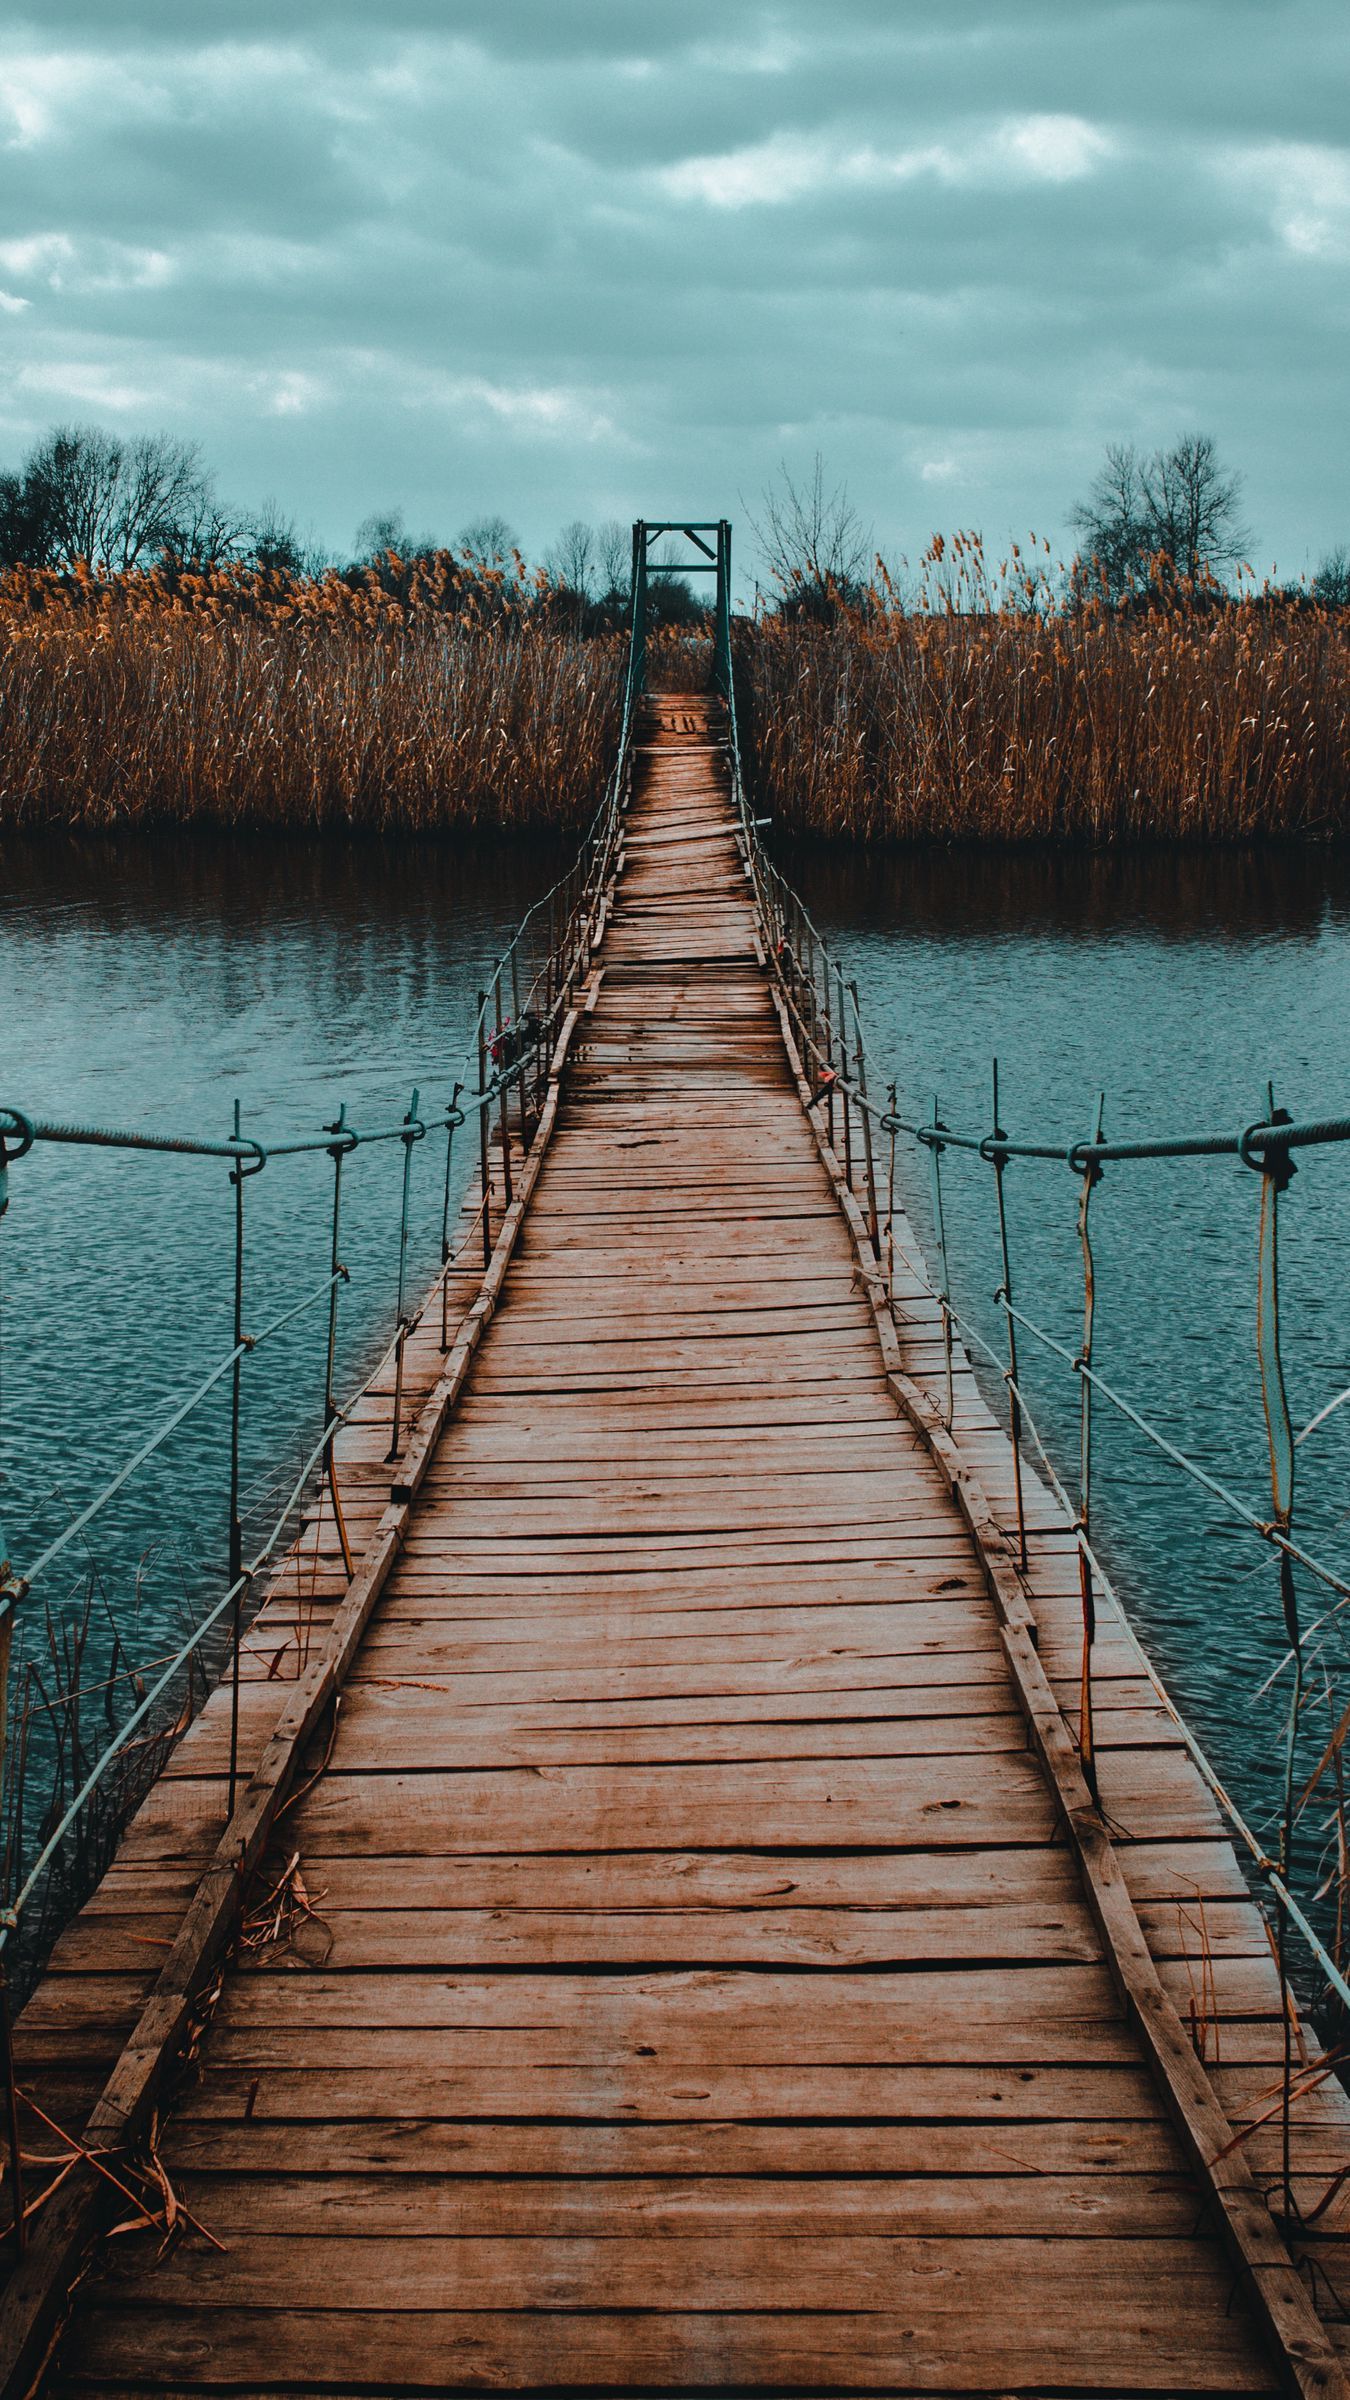 دانلود تصویر زمینه رویایی از پل معلق روی دریاچه   